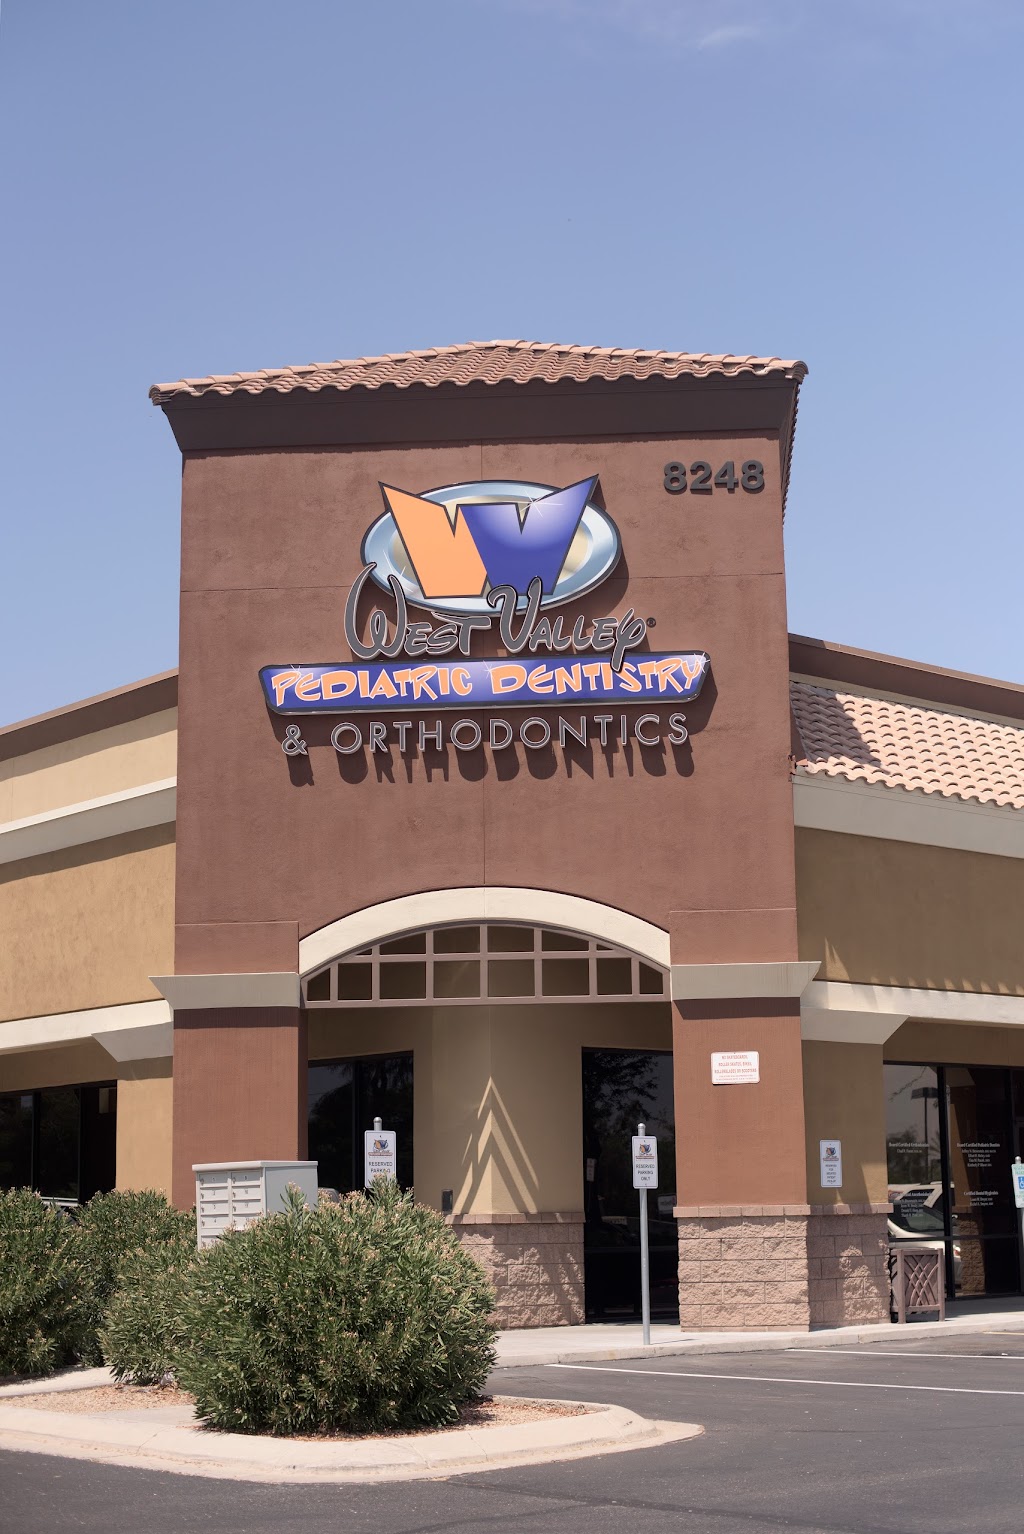 West Valley Pediatric Dentistry & Orthodontics | 8248 W Deer Valley Rd, Peoria, AZ 85382, USA | Phone: (623) 935-9873